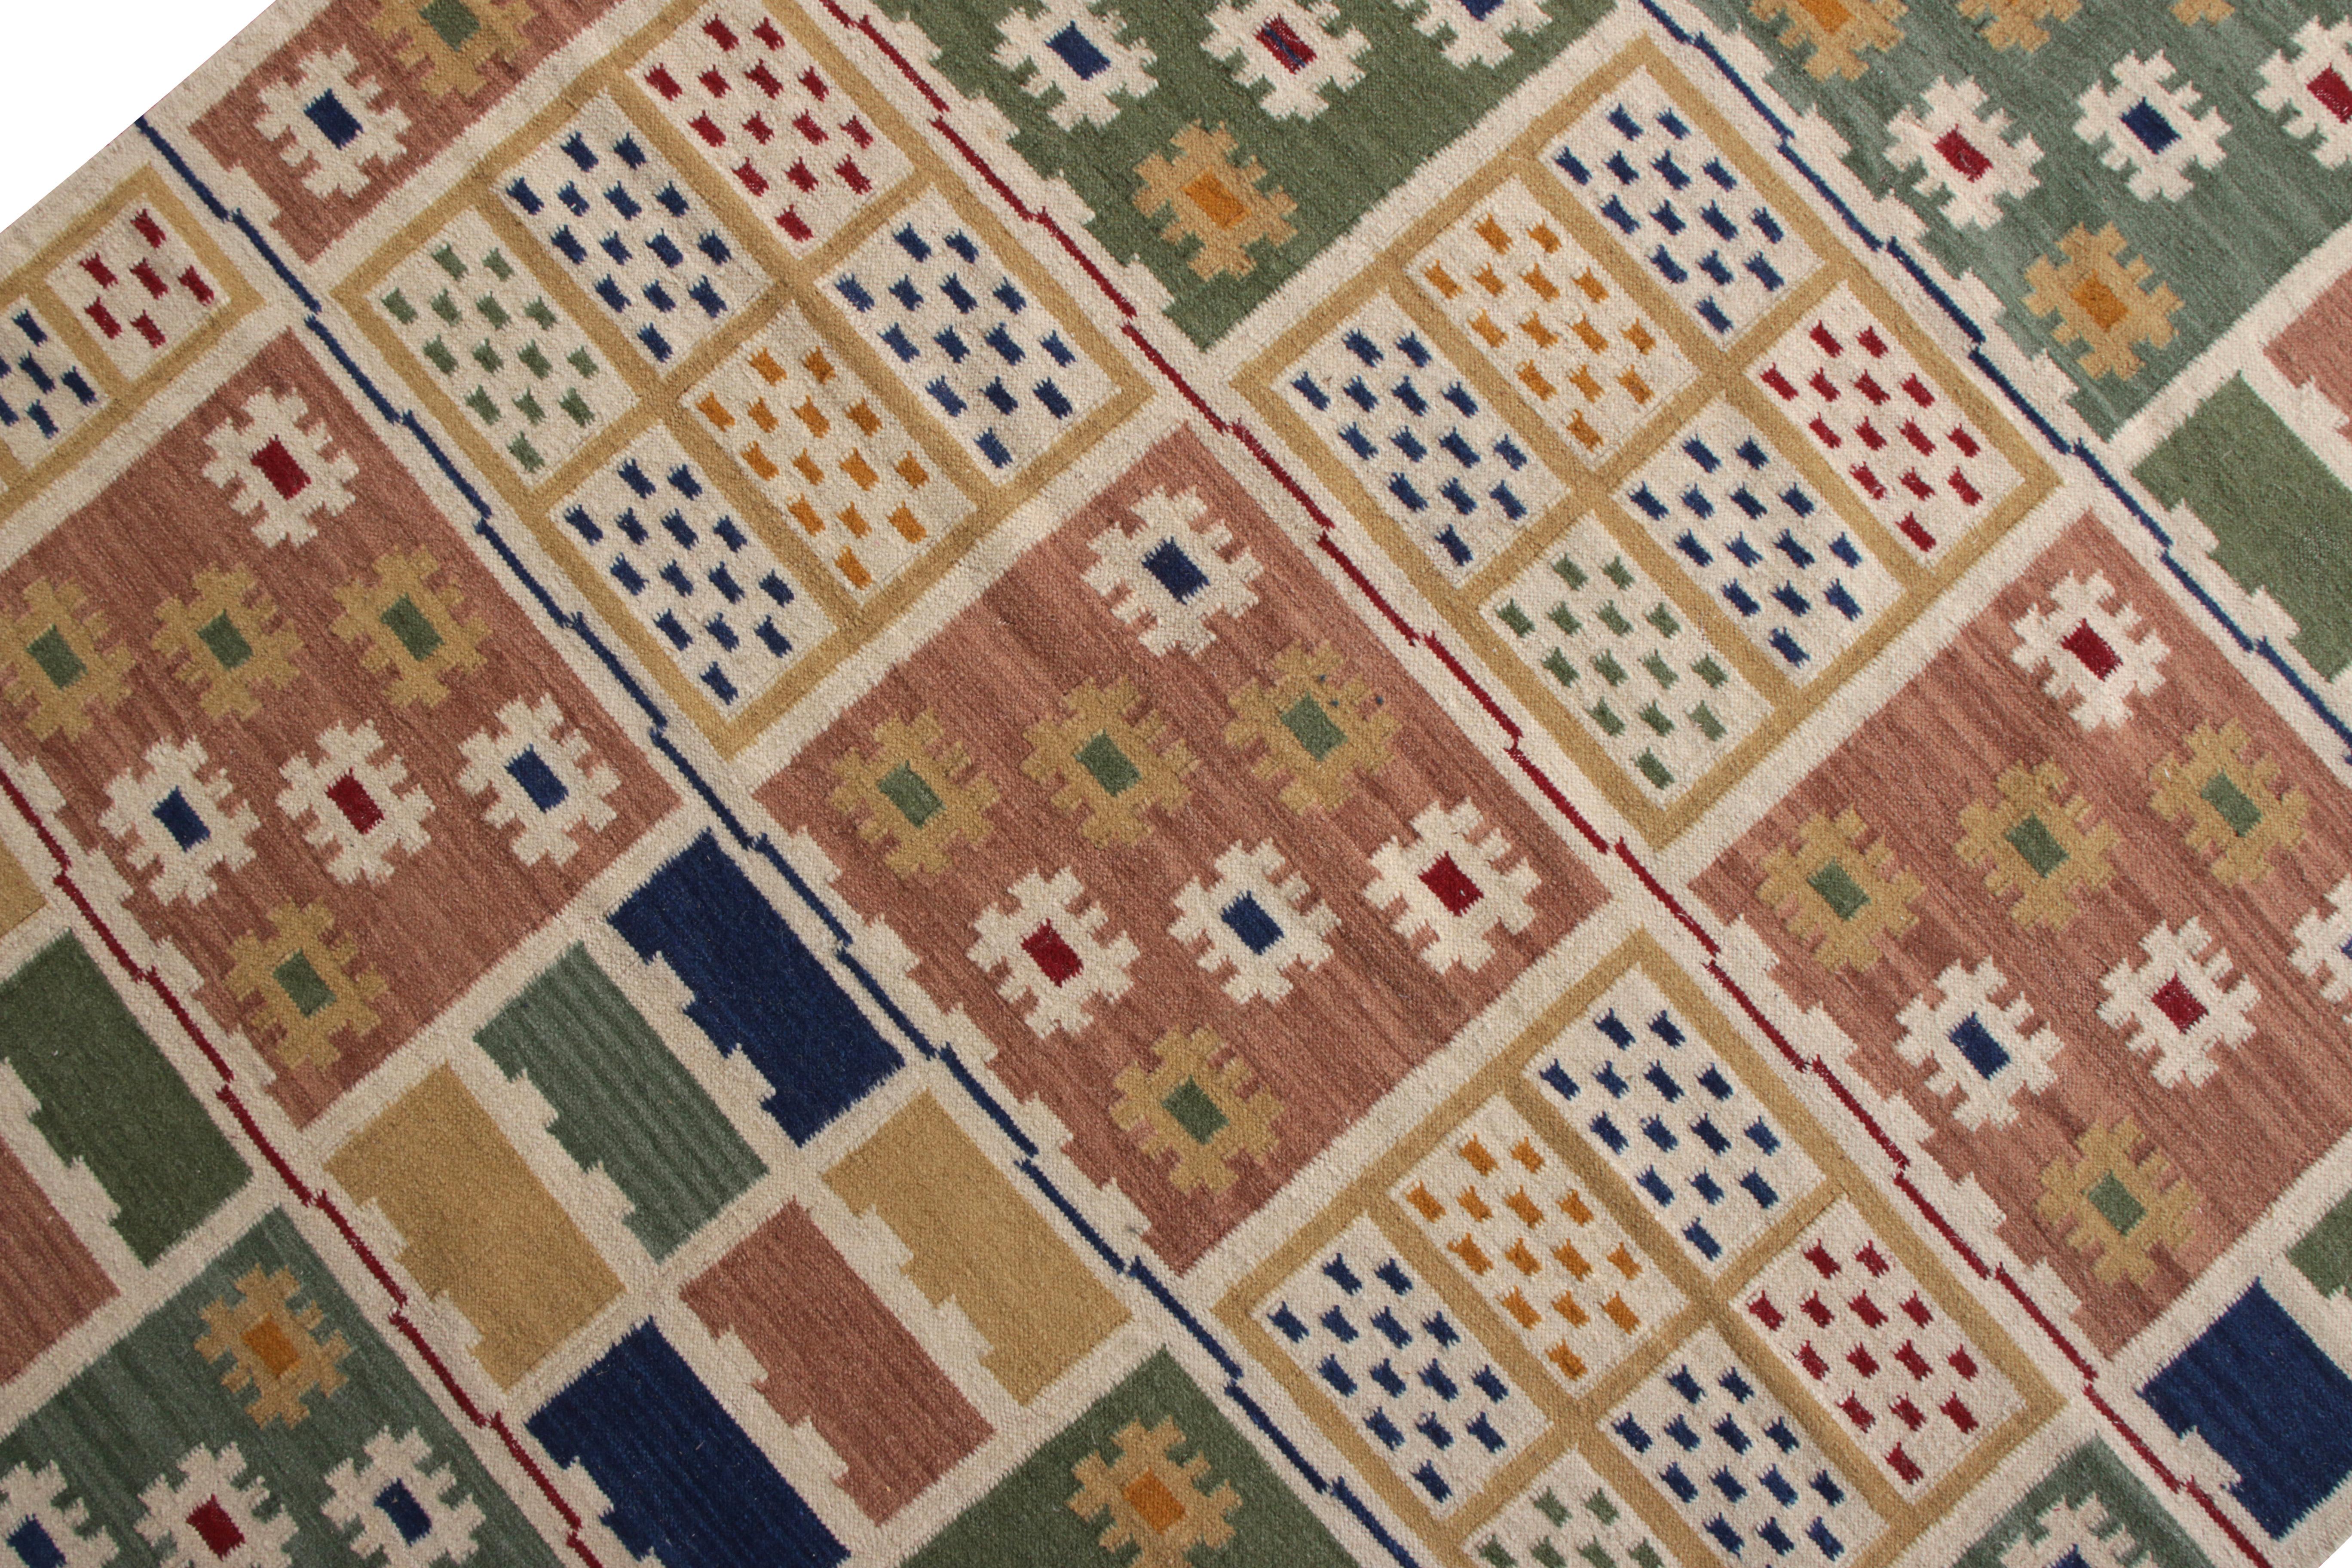 Indian Scandinavian Style Kilim Rug in Multi-Color Geometric Pattern by Rug & Kilim